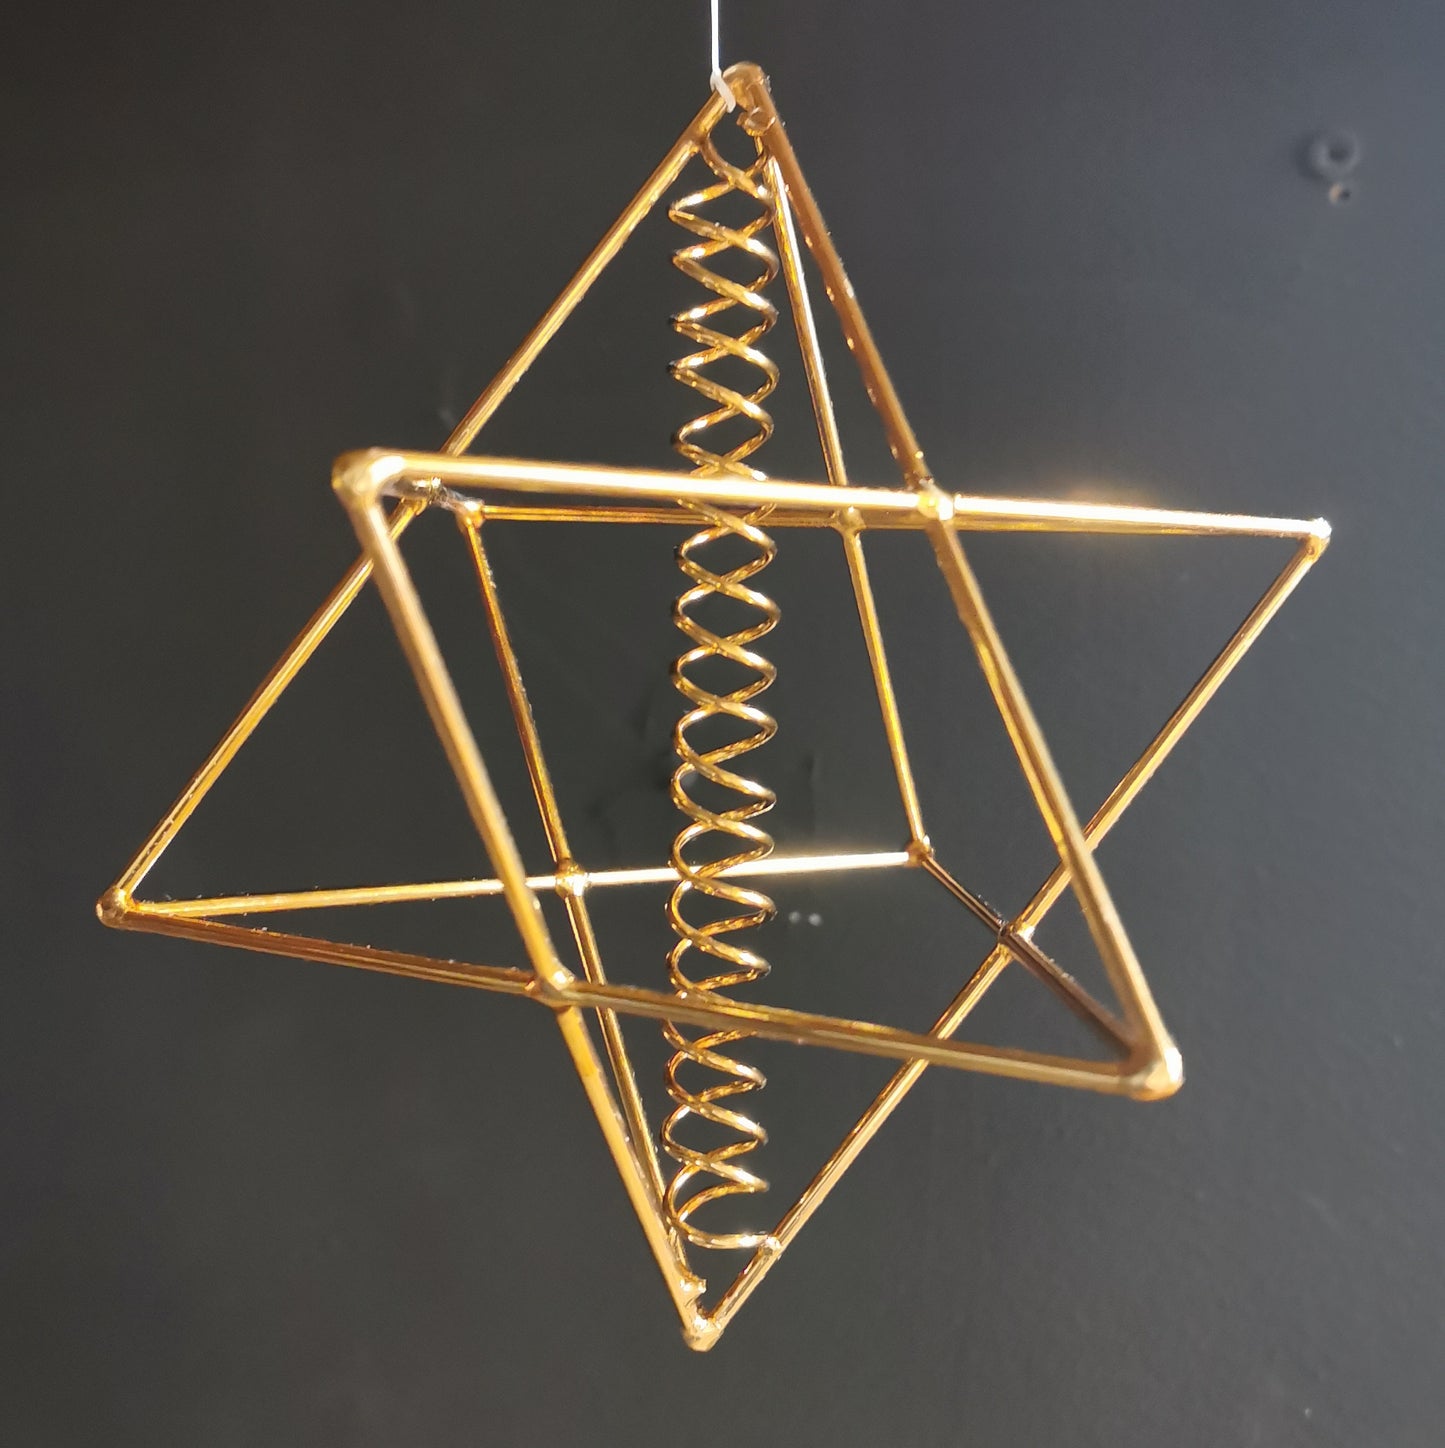 Ref.ST0094 - Star Tetrahedron w/ dna helix